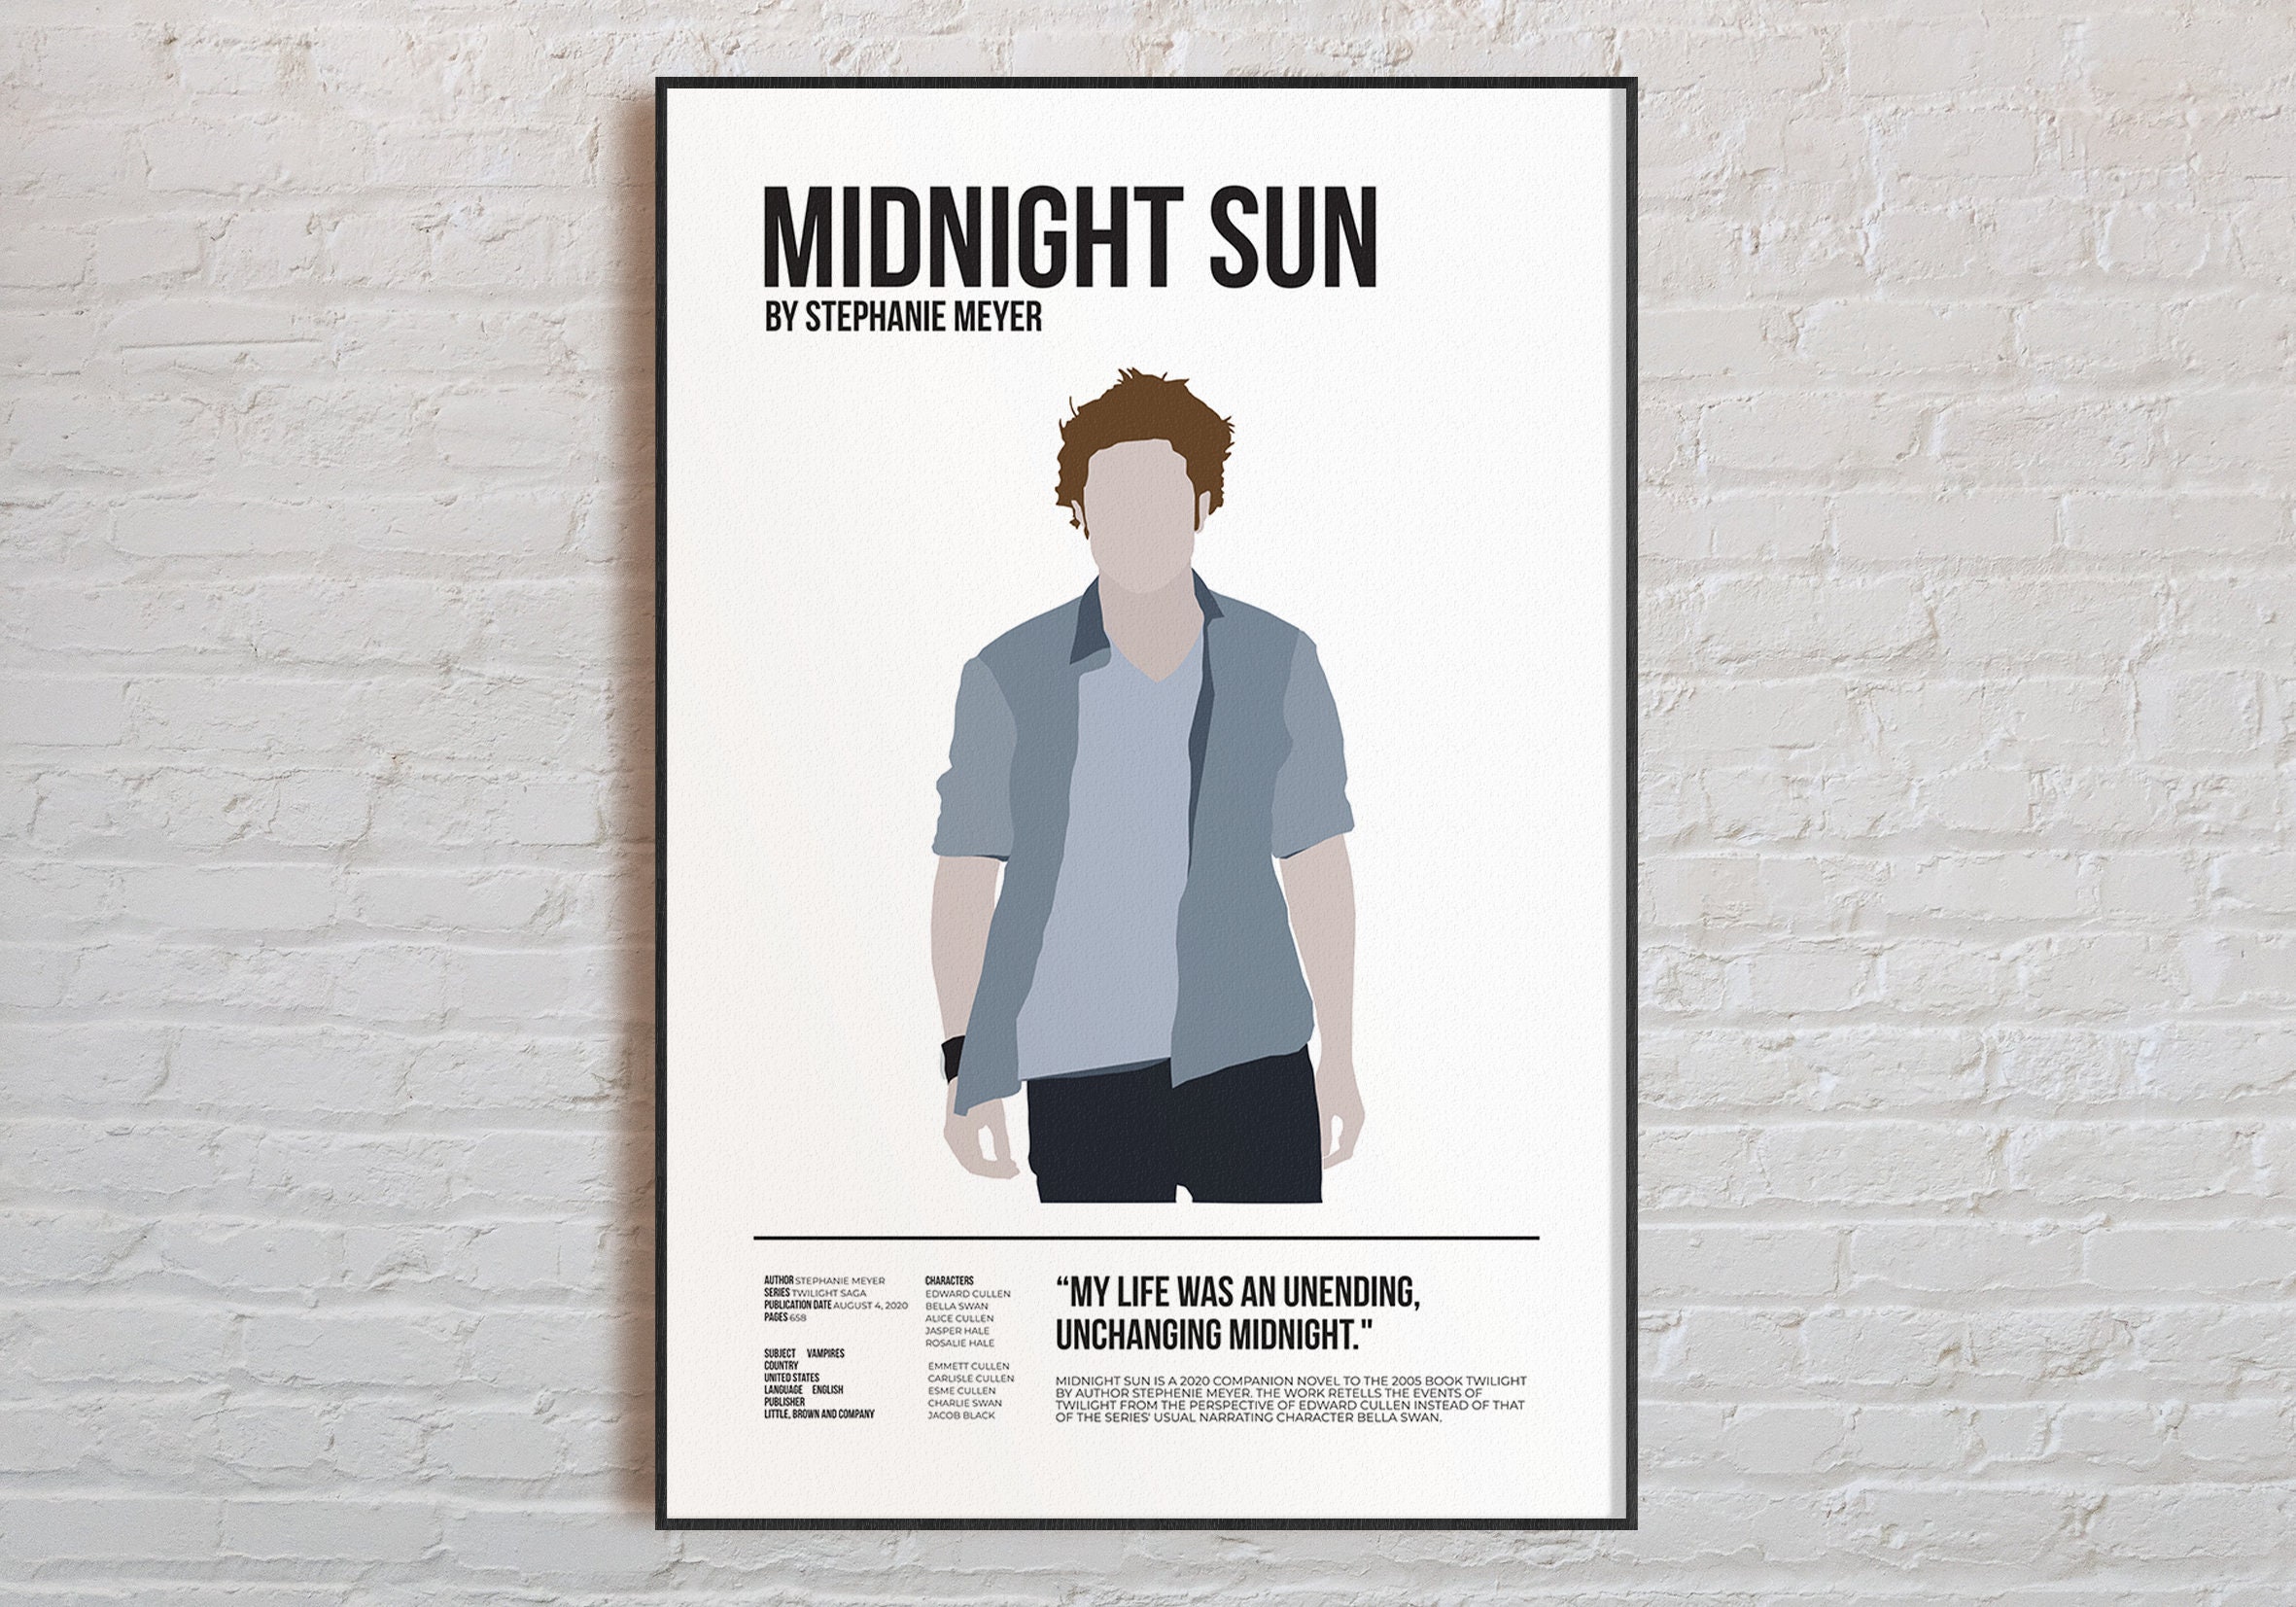 Midnight Sun 112 Twilight Stephenie Meyer